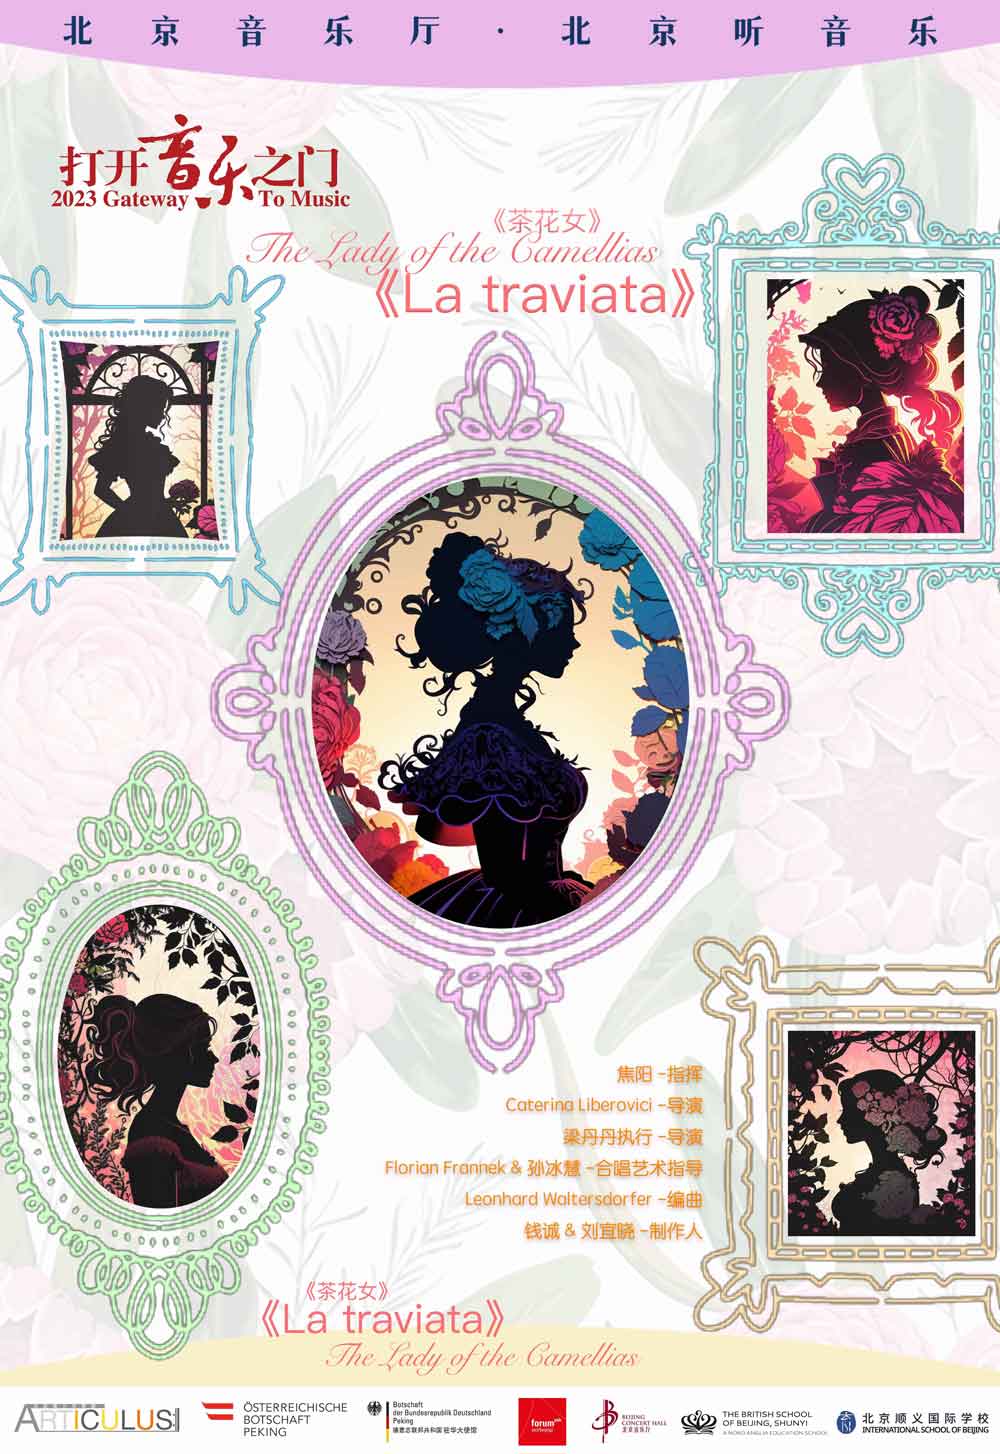 La Traviata ⟪茶花女⟫ 6月19日演出购票信息 - Get your tickets for La Traviata